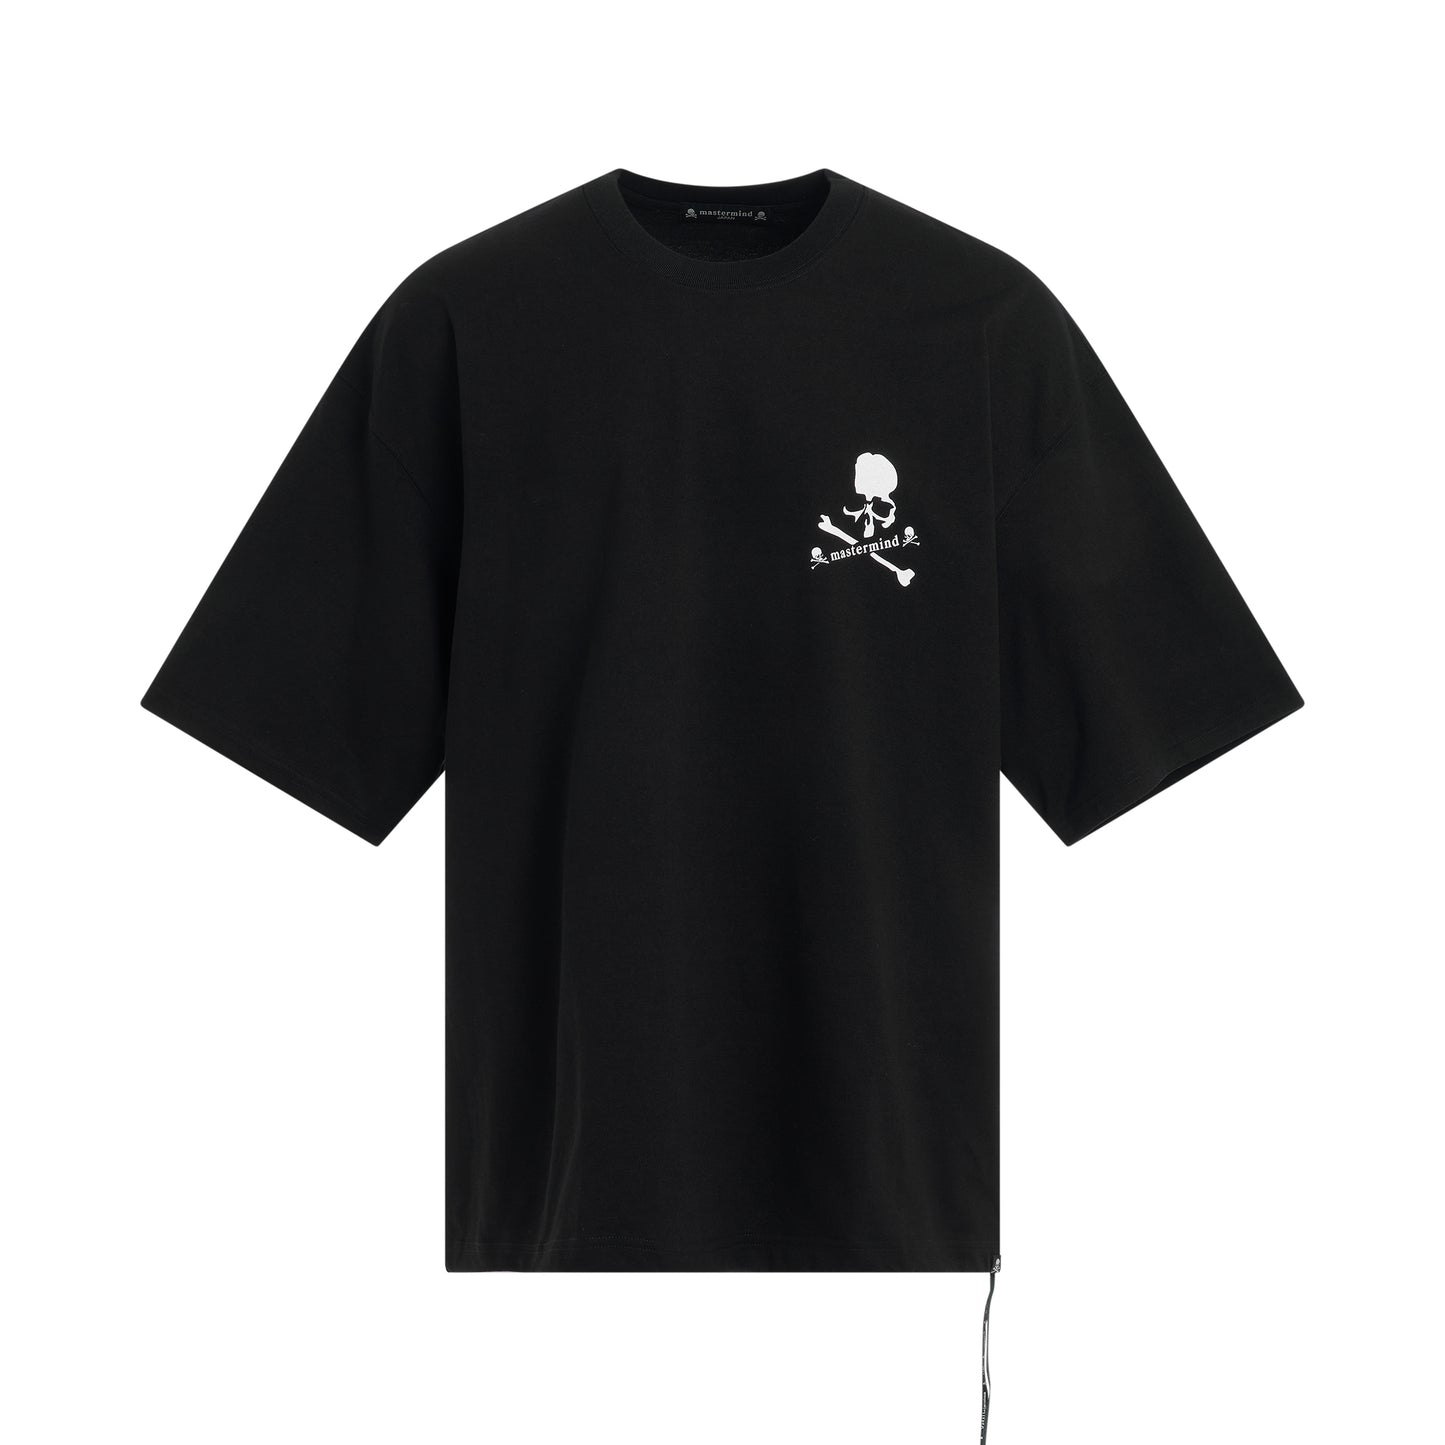 Glow in the Dark Skull Boxy Fit T-Shirt in Black